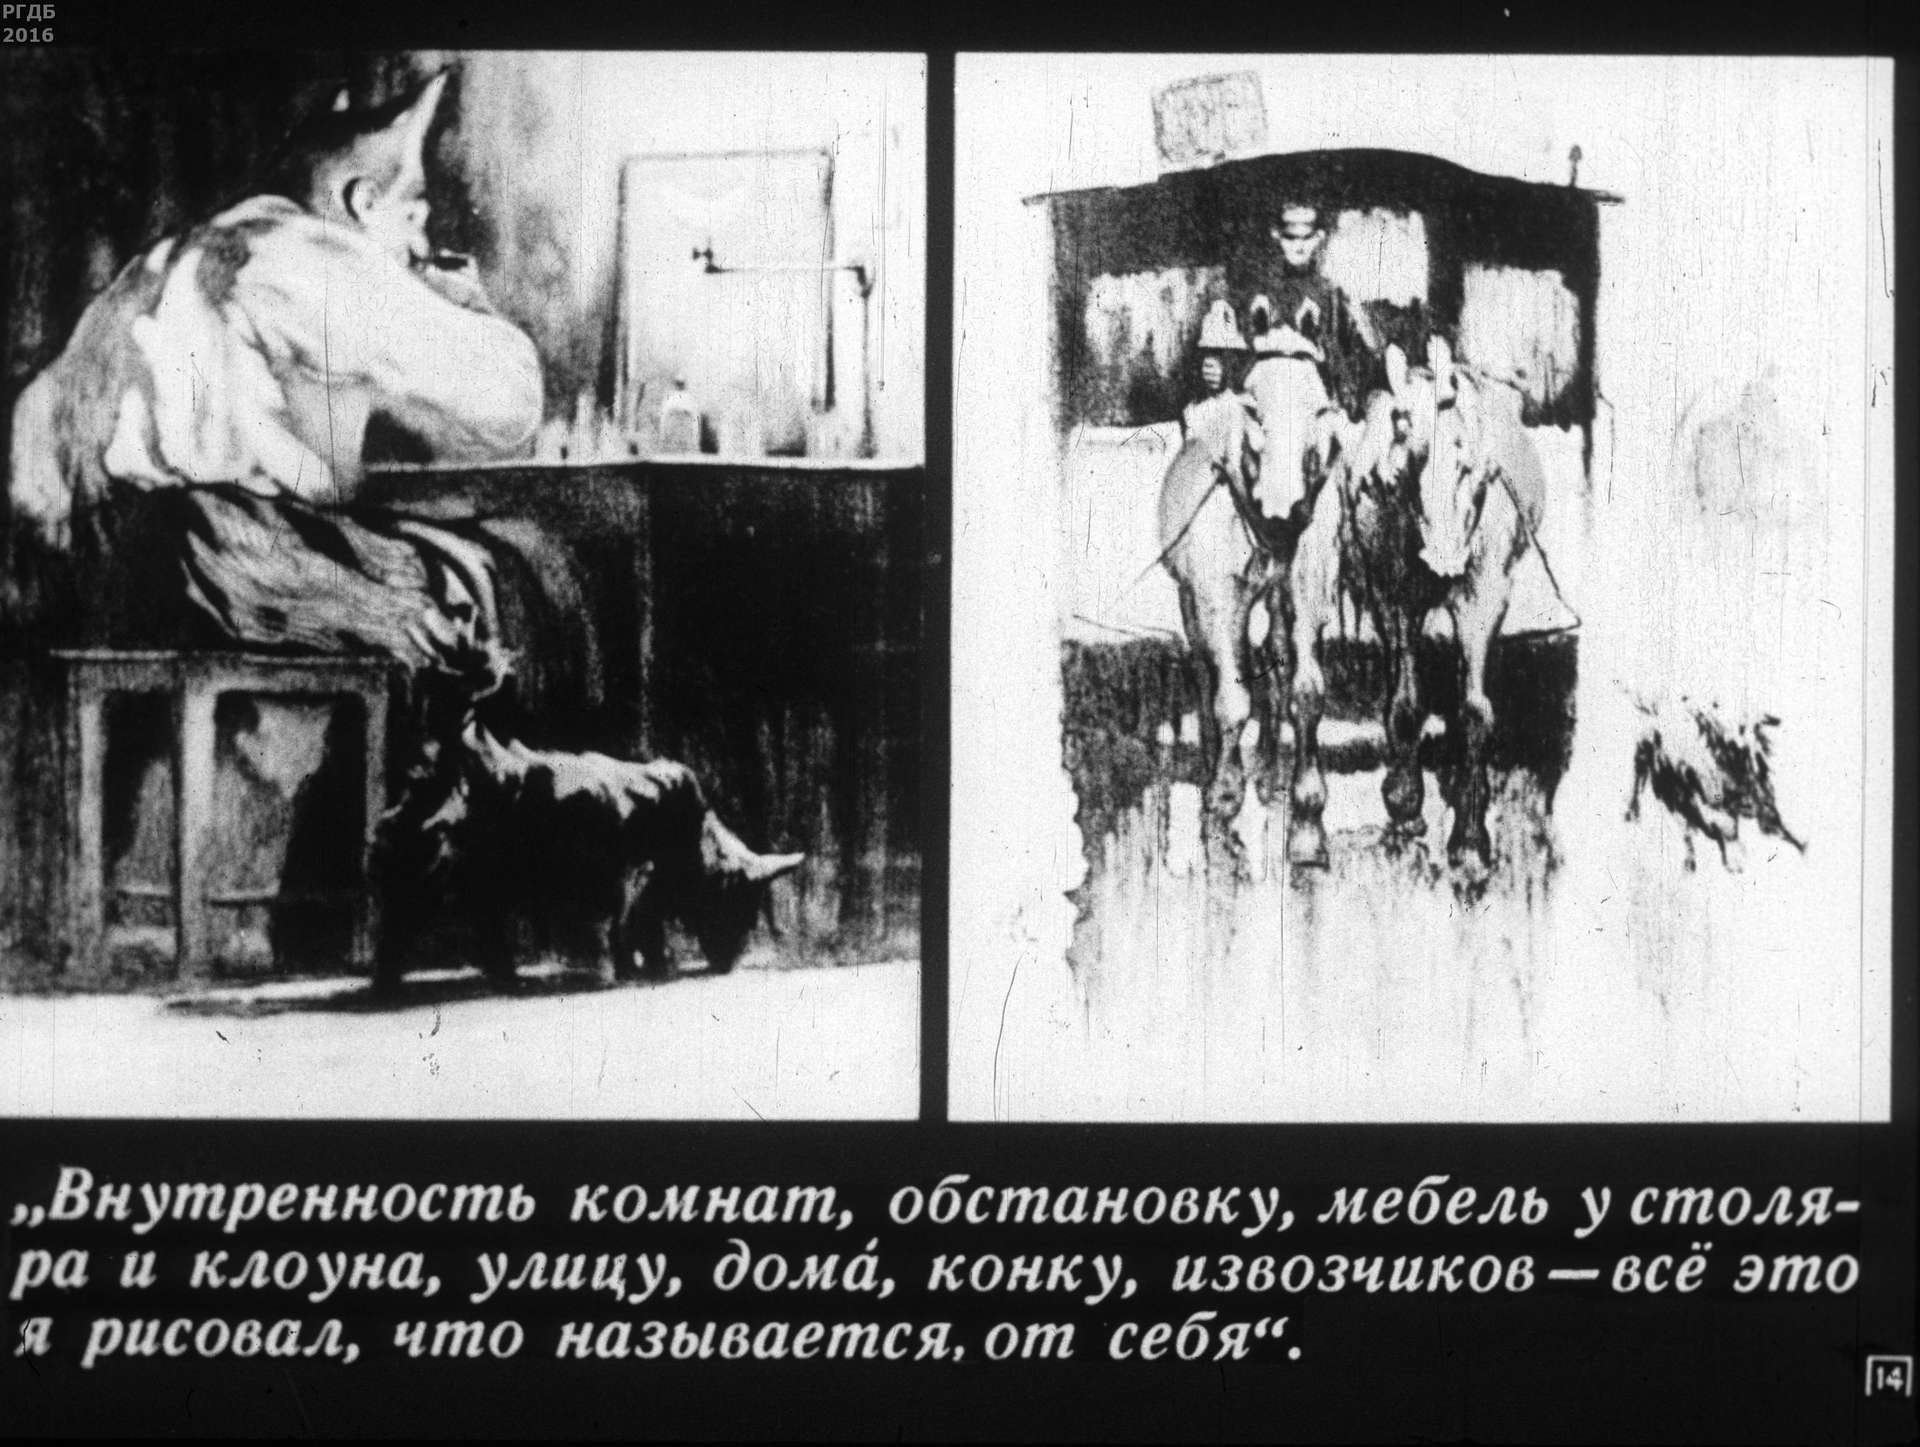 «Каштанка» А.П. Чехова и «Каштанка» Д.Н. Кардовского (1975)